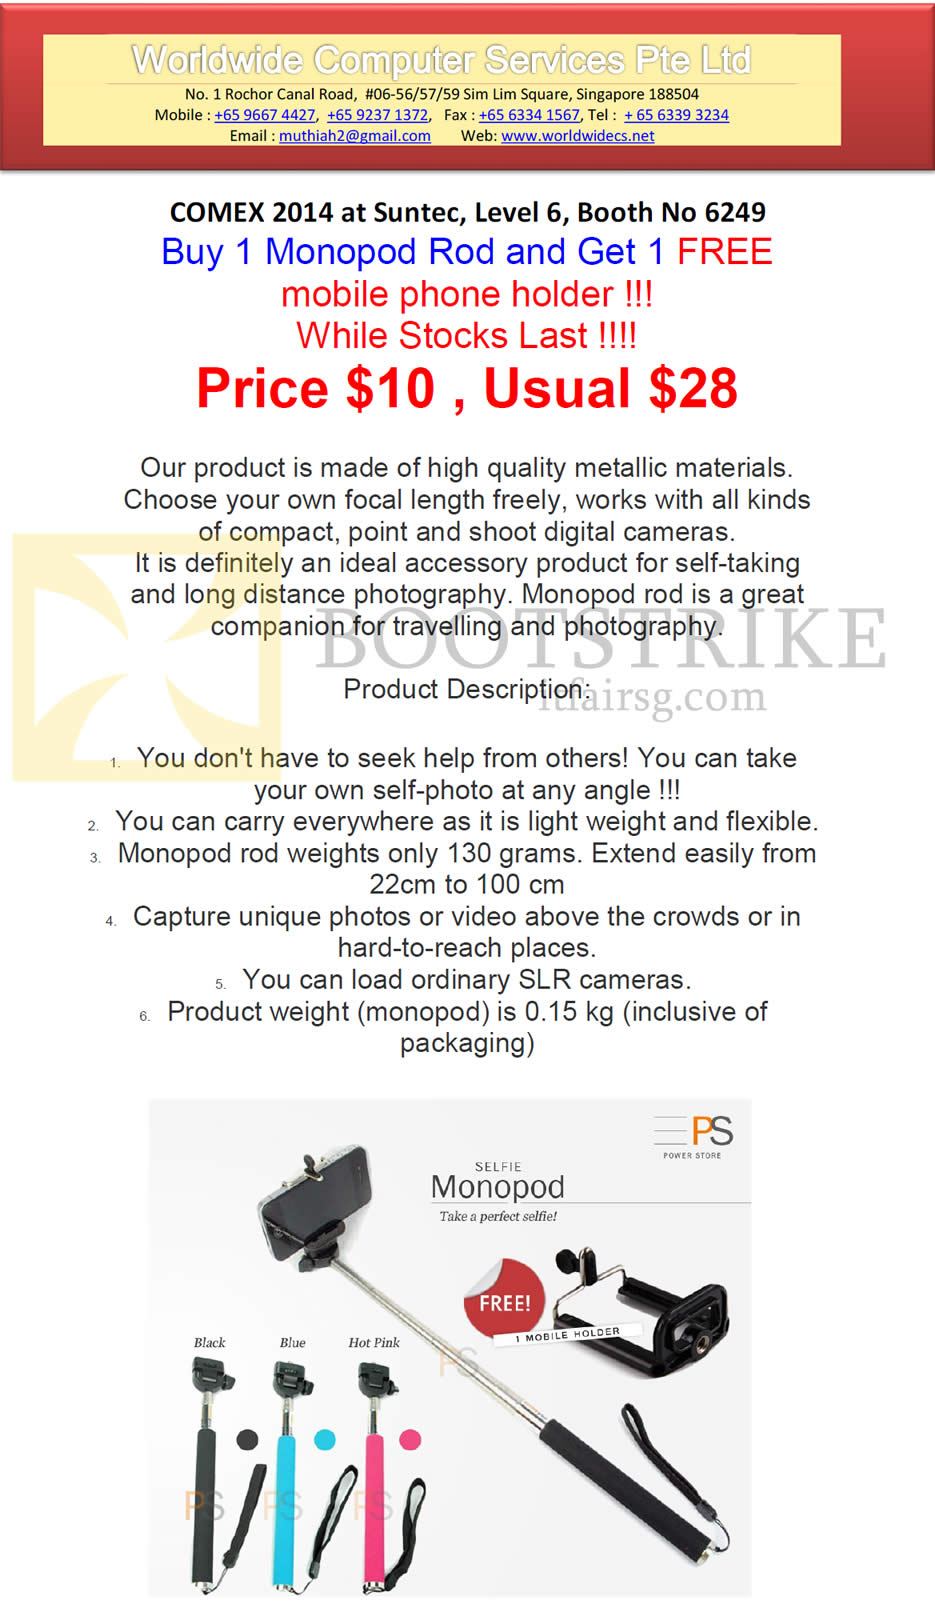 COMEX 2014 price list image brochure of Worldwide Computer Services Selfie Monopod Rod